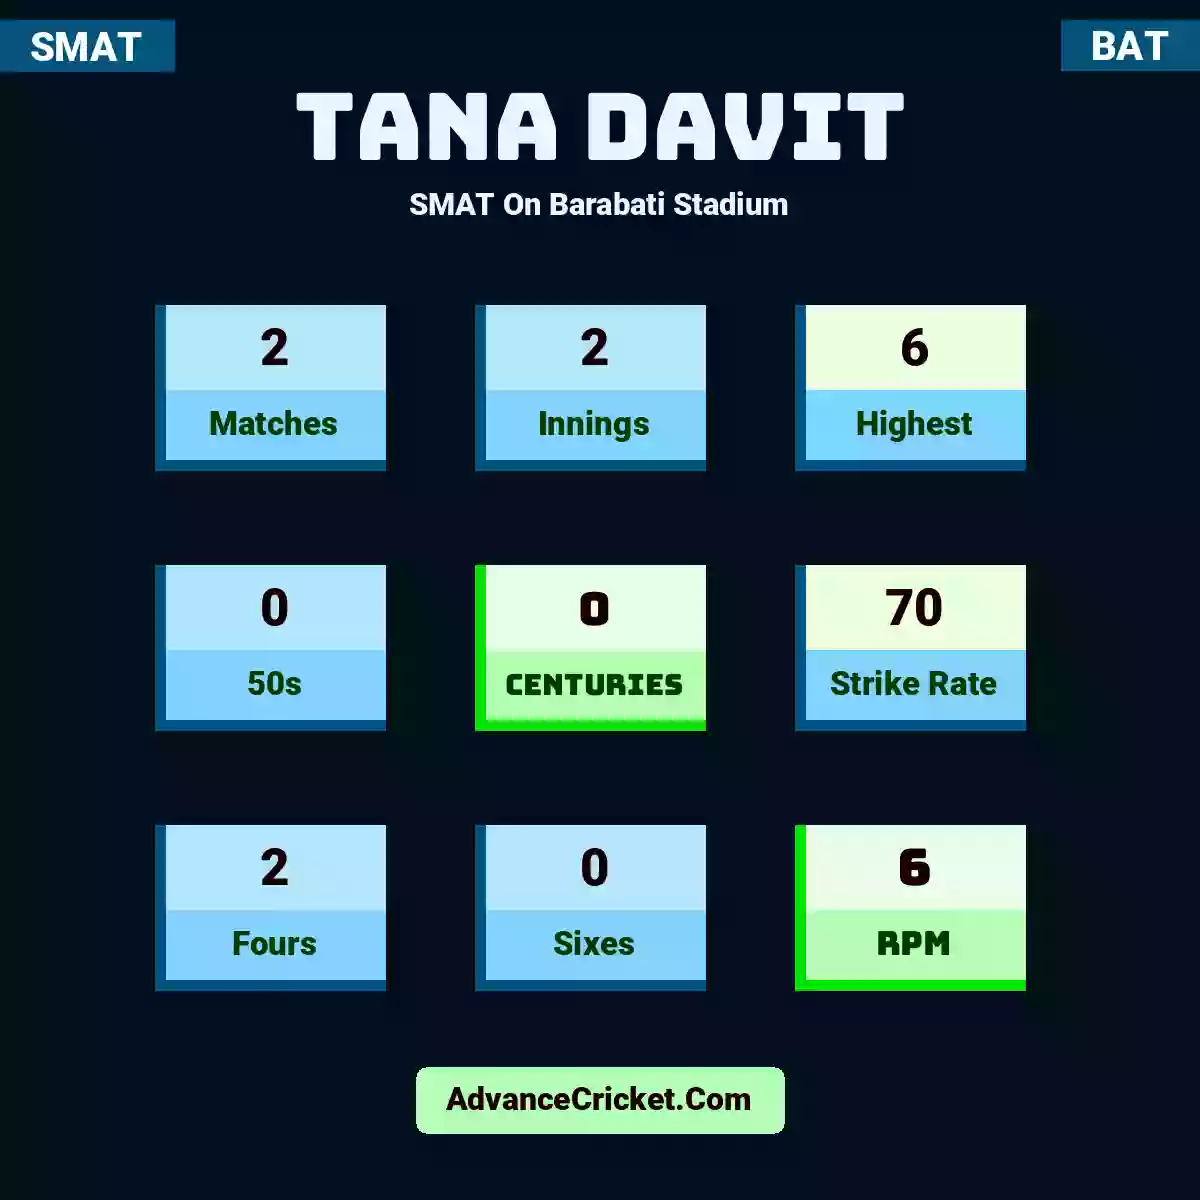 Tana Davit SMAT  On Barabati Stadium, Tana Davit played 2 matches, scored 6 runs as highest, 0 half-centuries, and 0 centuries, with a strike rate of 70. T.Davit hit 2 fours and 0 sixes, with an RPM of 6.